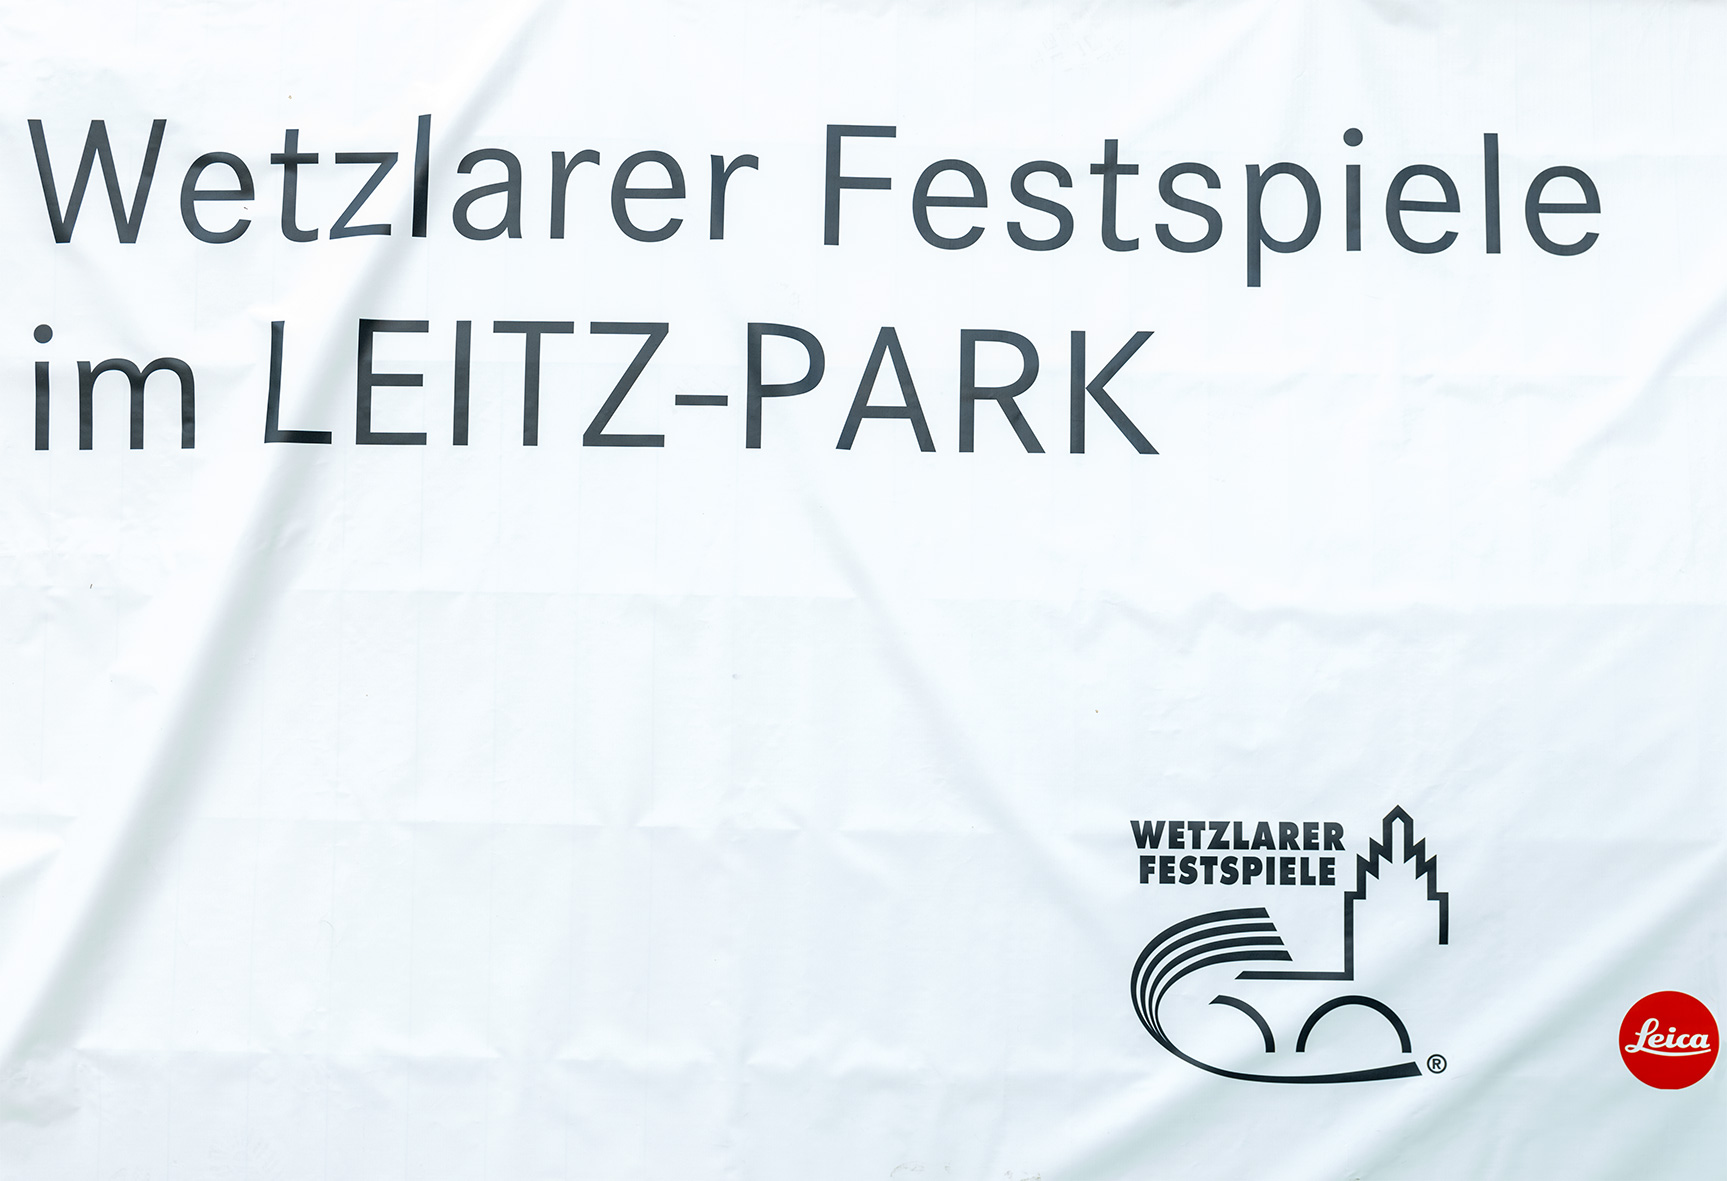 Wetzlarer Festspiele Im LEITZ PARK